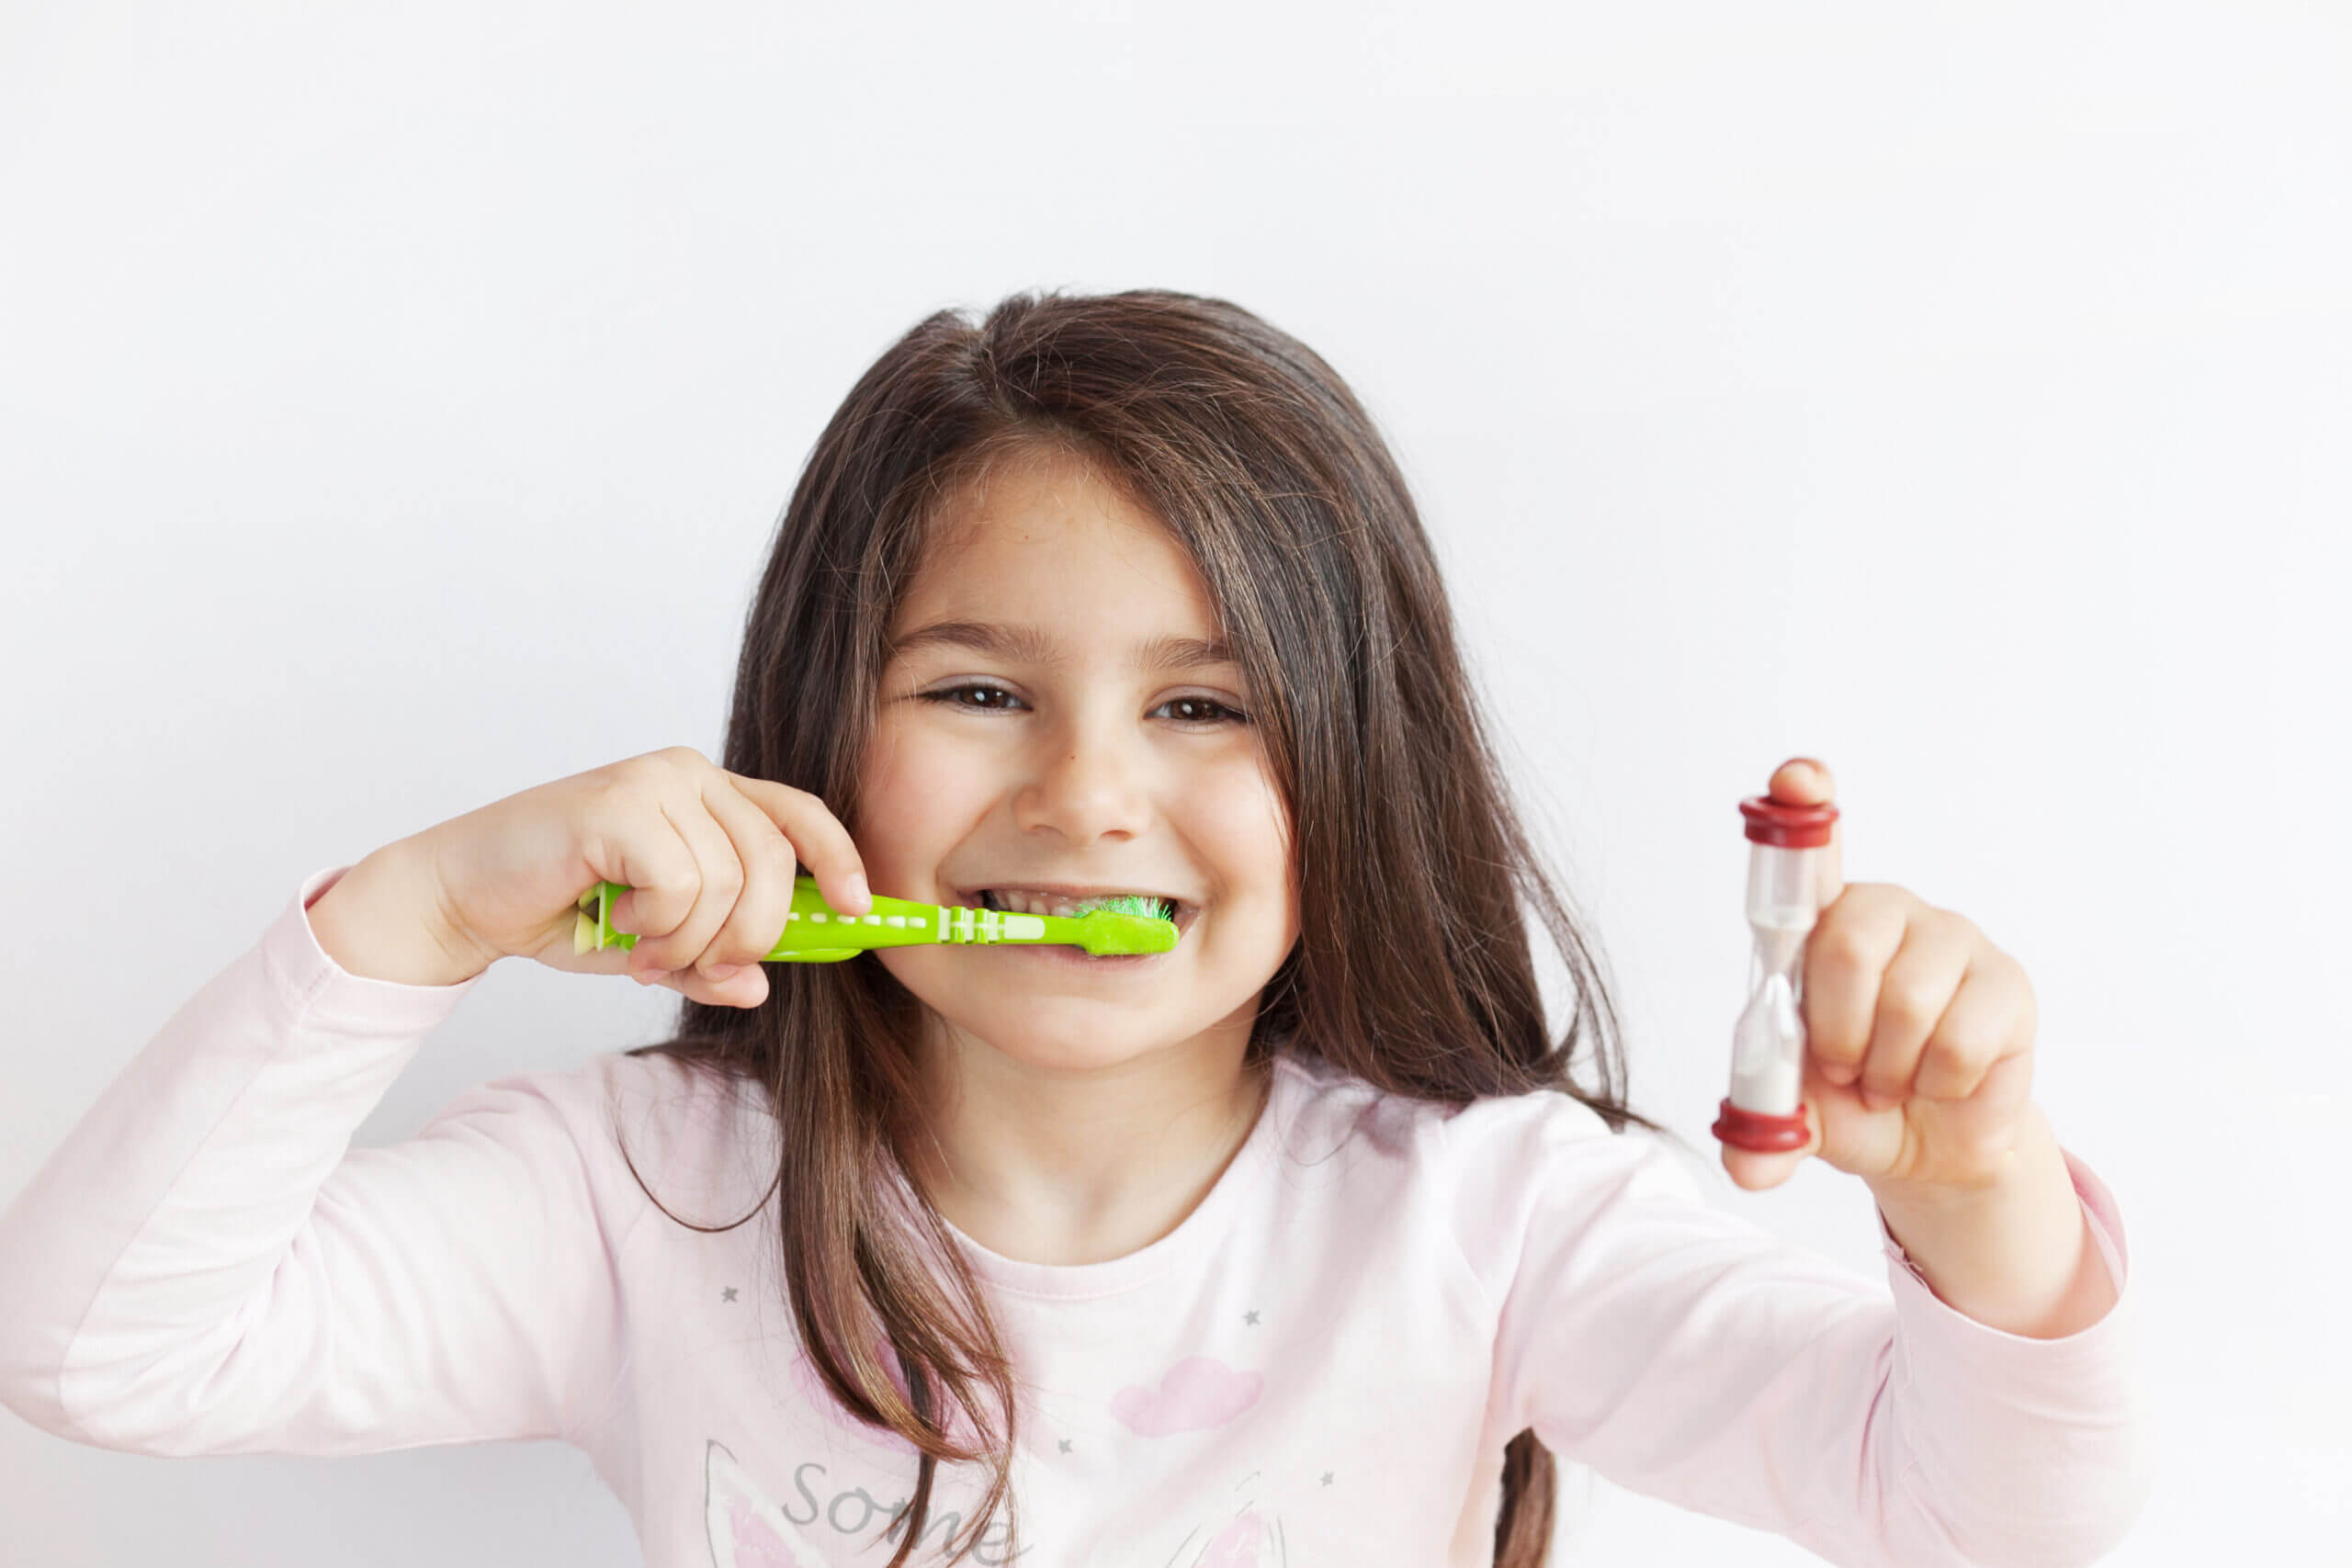 brushing teeth create fun for kids super dentist pediatric care